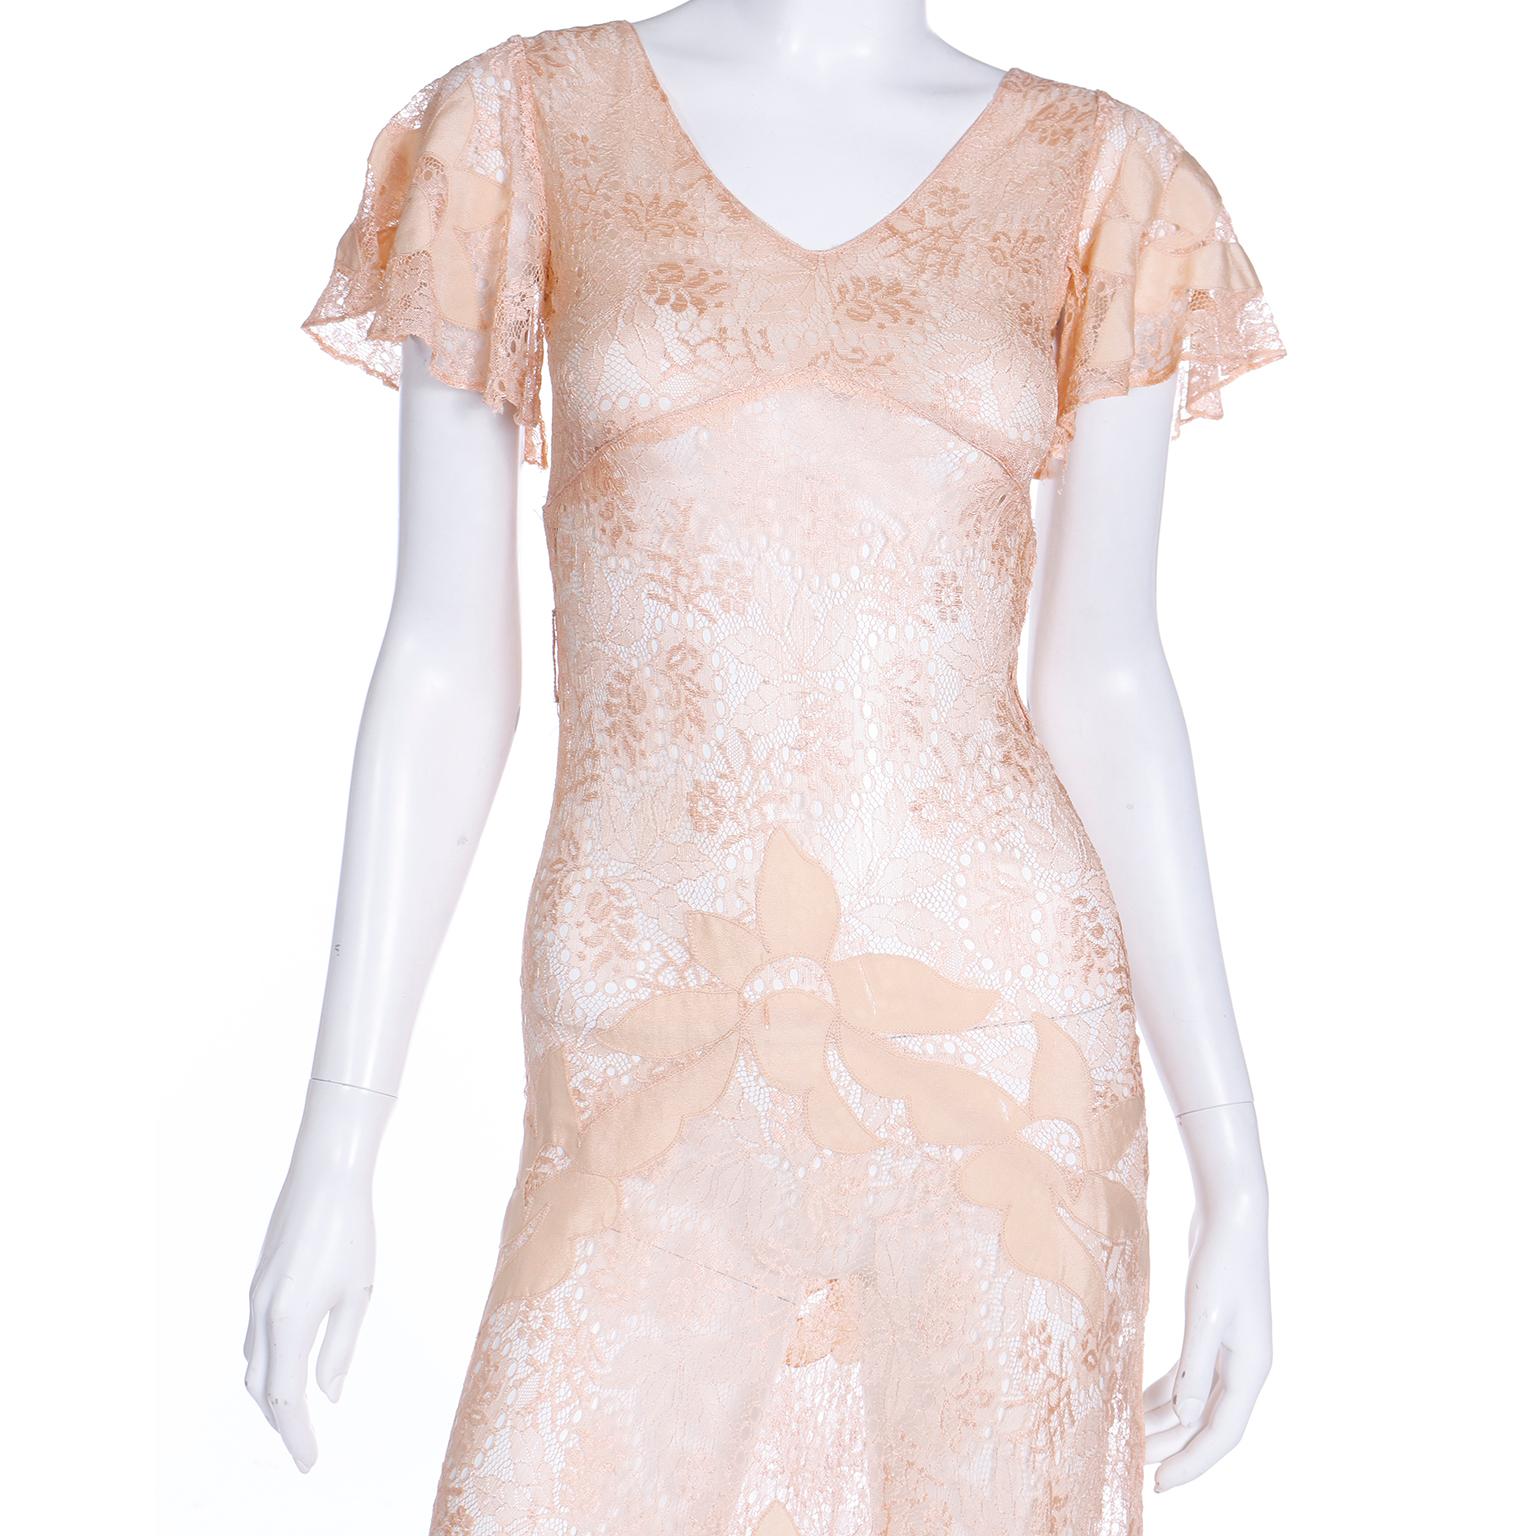 1930s Bias Silk & Lace Vintage Dress in Peach W Appliqués Butterfly Sleeves For Sale 3